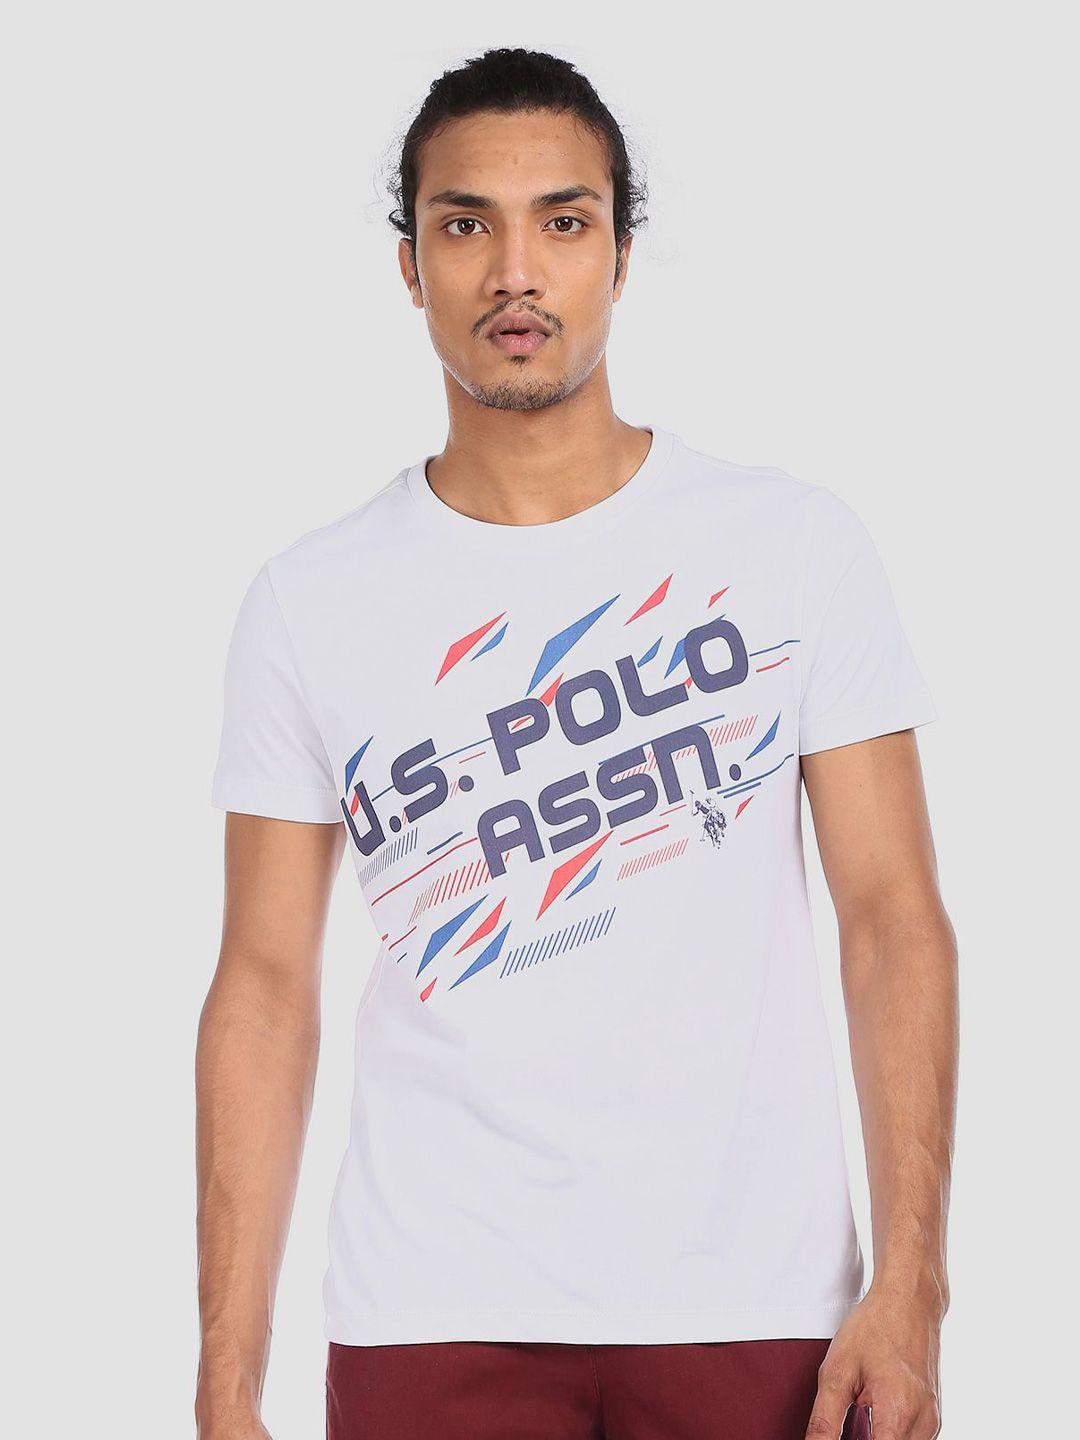 u.s. polo assn. denim co. men white slim fit brand logo printed round neck pure cotton t-shirt